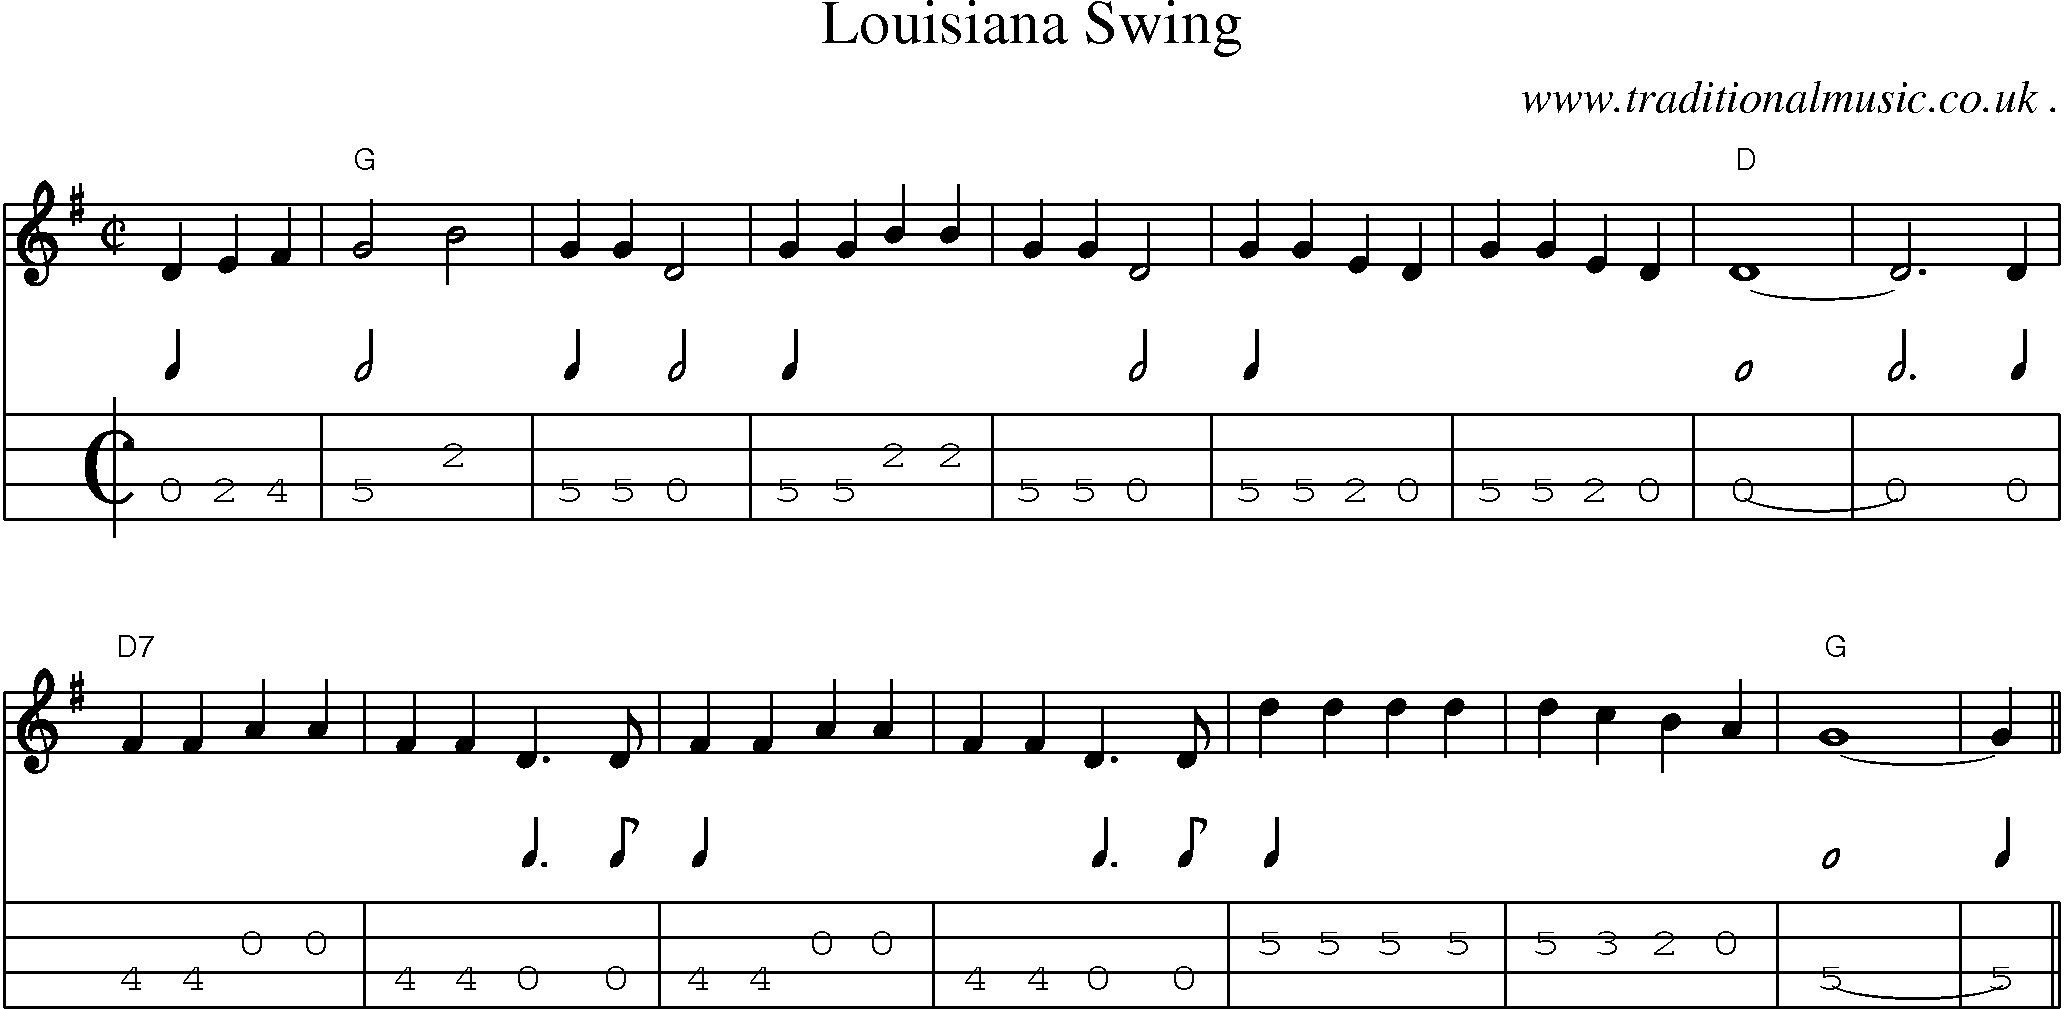 Music Score and Mandolin Tabs for Louisiana Swing